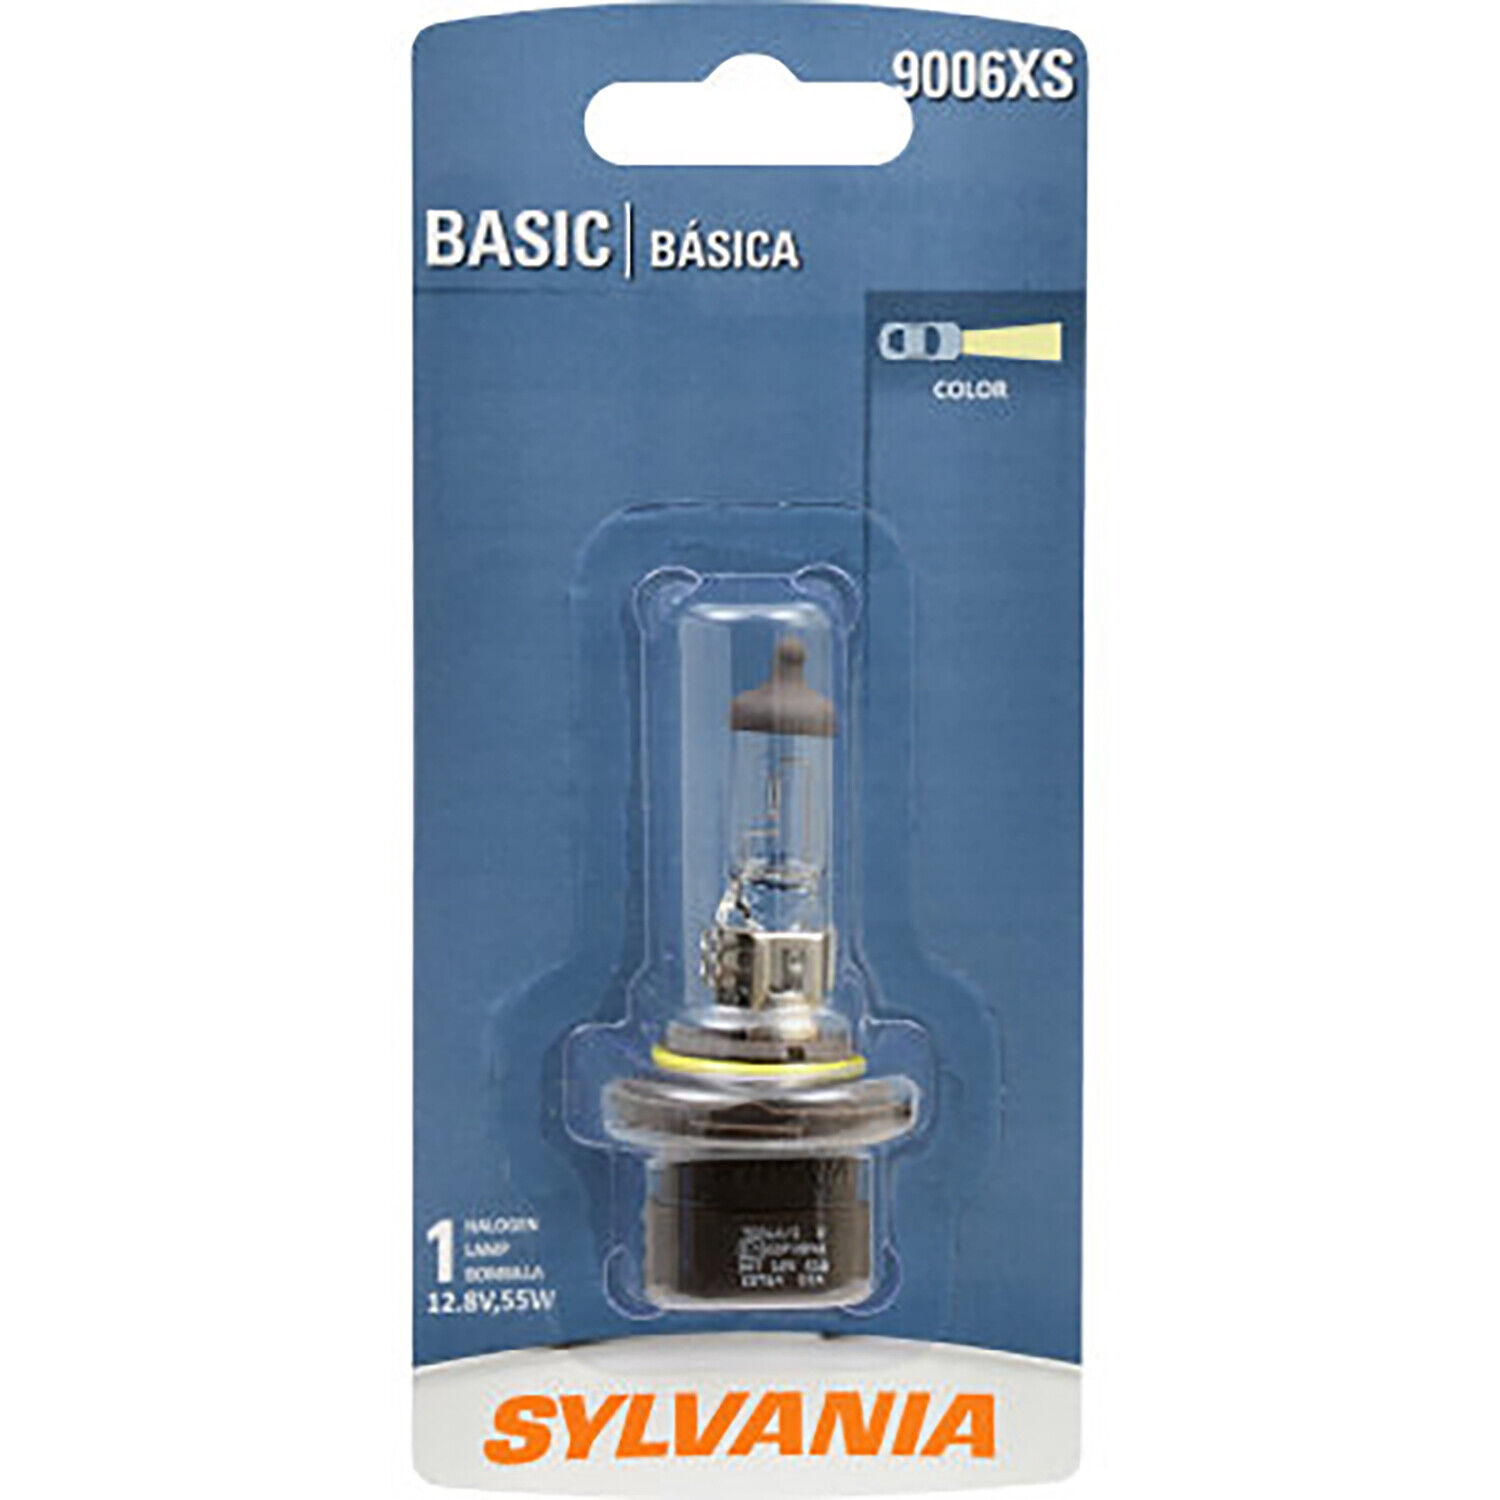 SYLVANIA - 9006XS Basic - Halogen Bulb for Headlight Applications (1 Bulb)